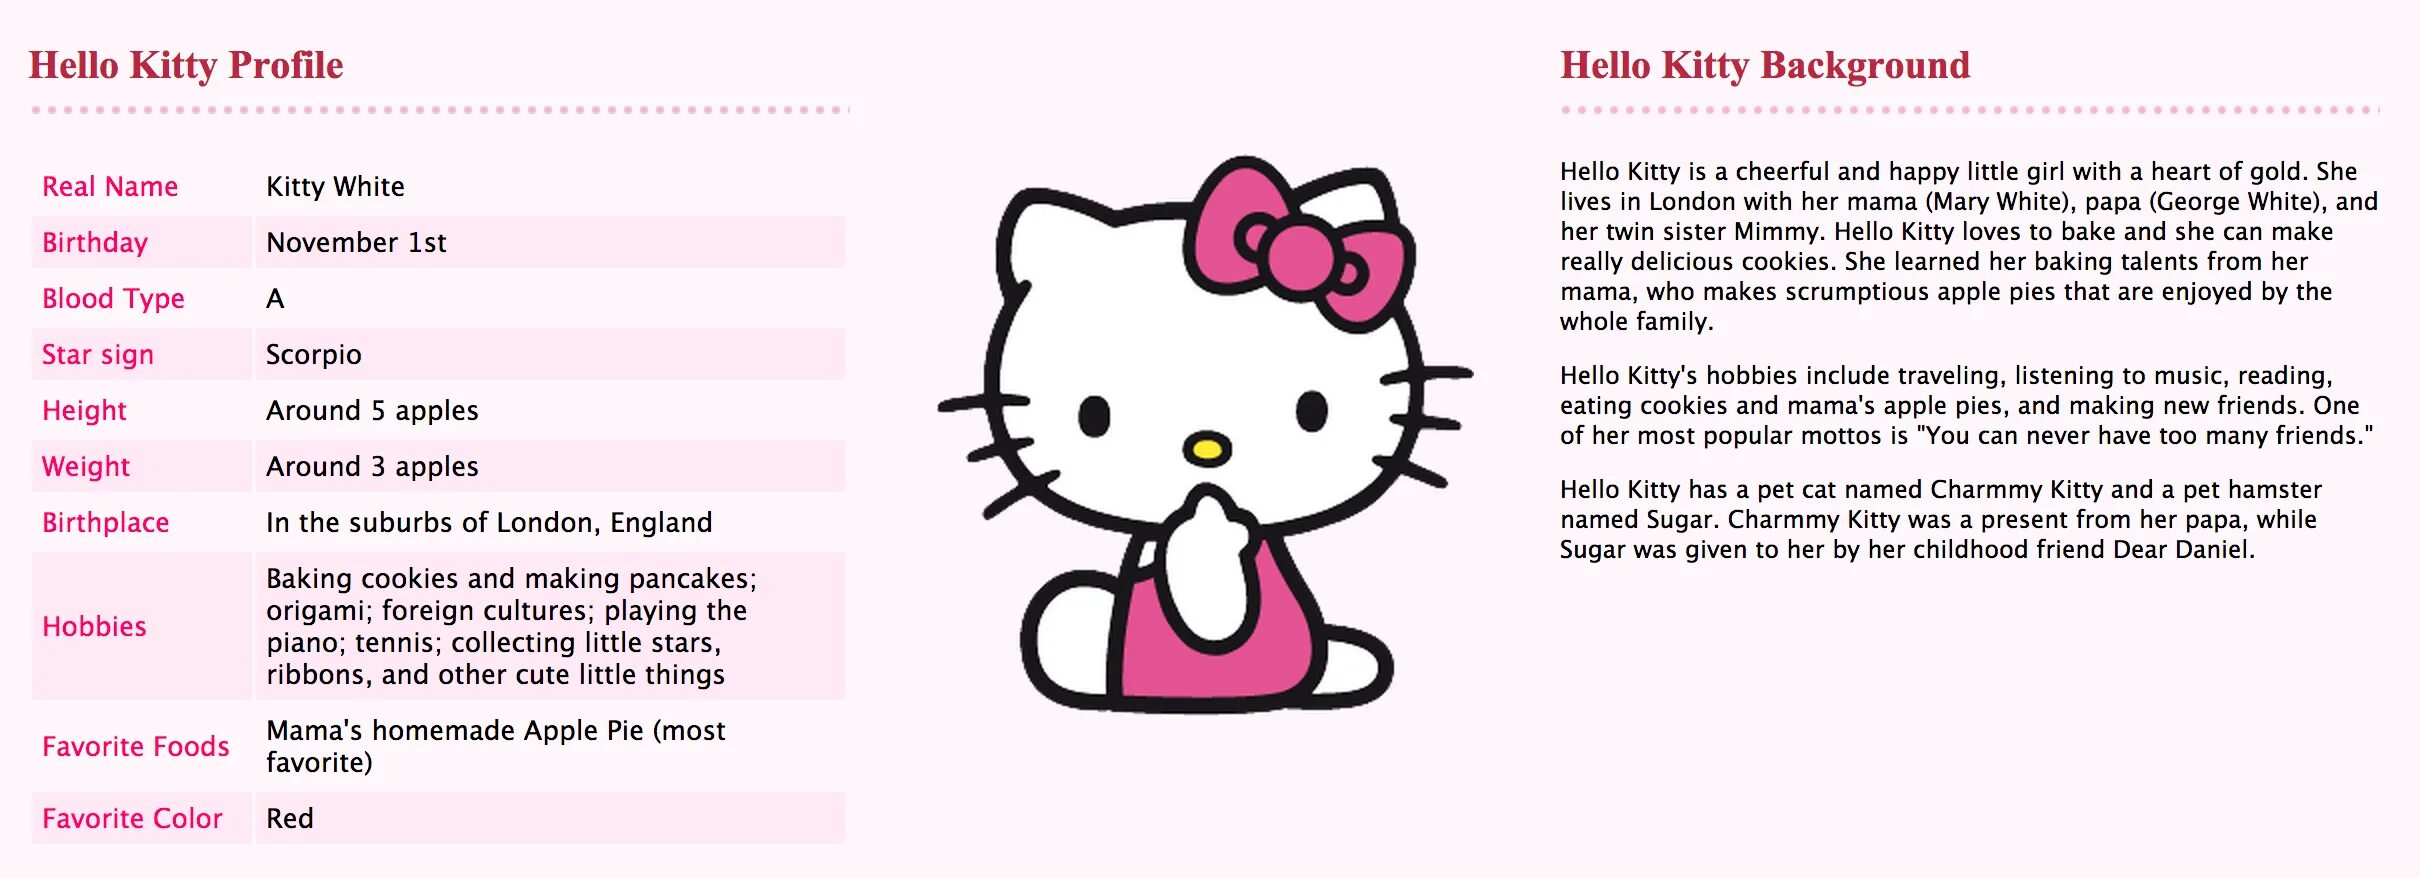 Как переводится хеллоу. Хеллоу Китти имена. Hello Kitty персонажи с именами. Hello Kitty с описанием. Хеллоу Китти и друзья имена.